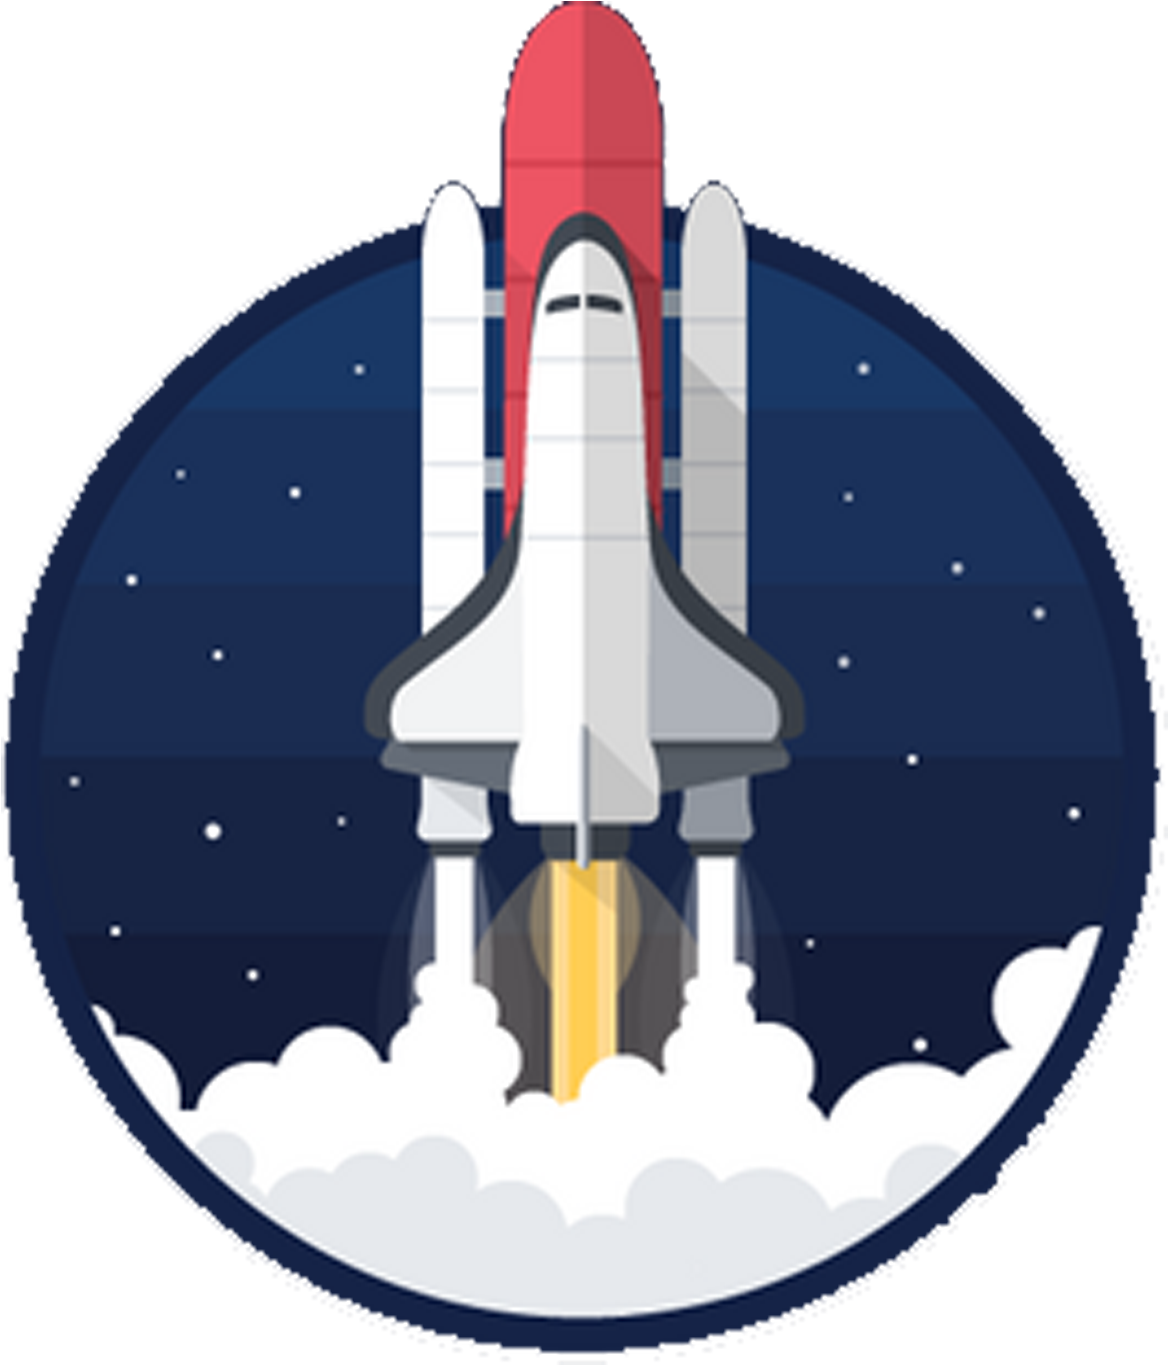 Rocket Launch Illustrator Illustration - Space Shuttle Flat Design (2362x2362)